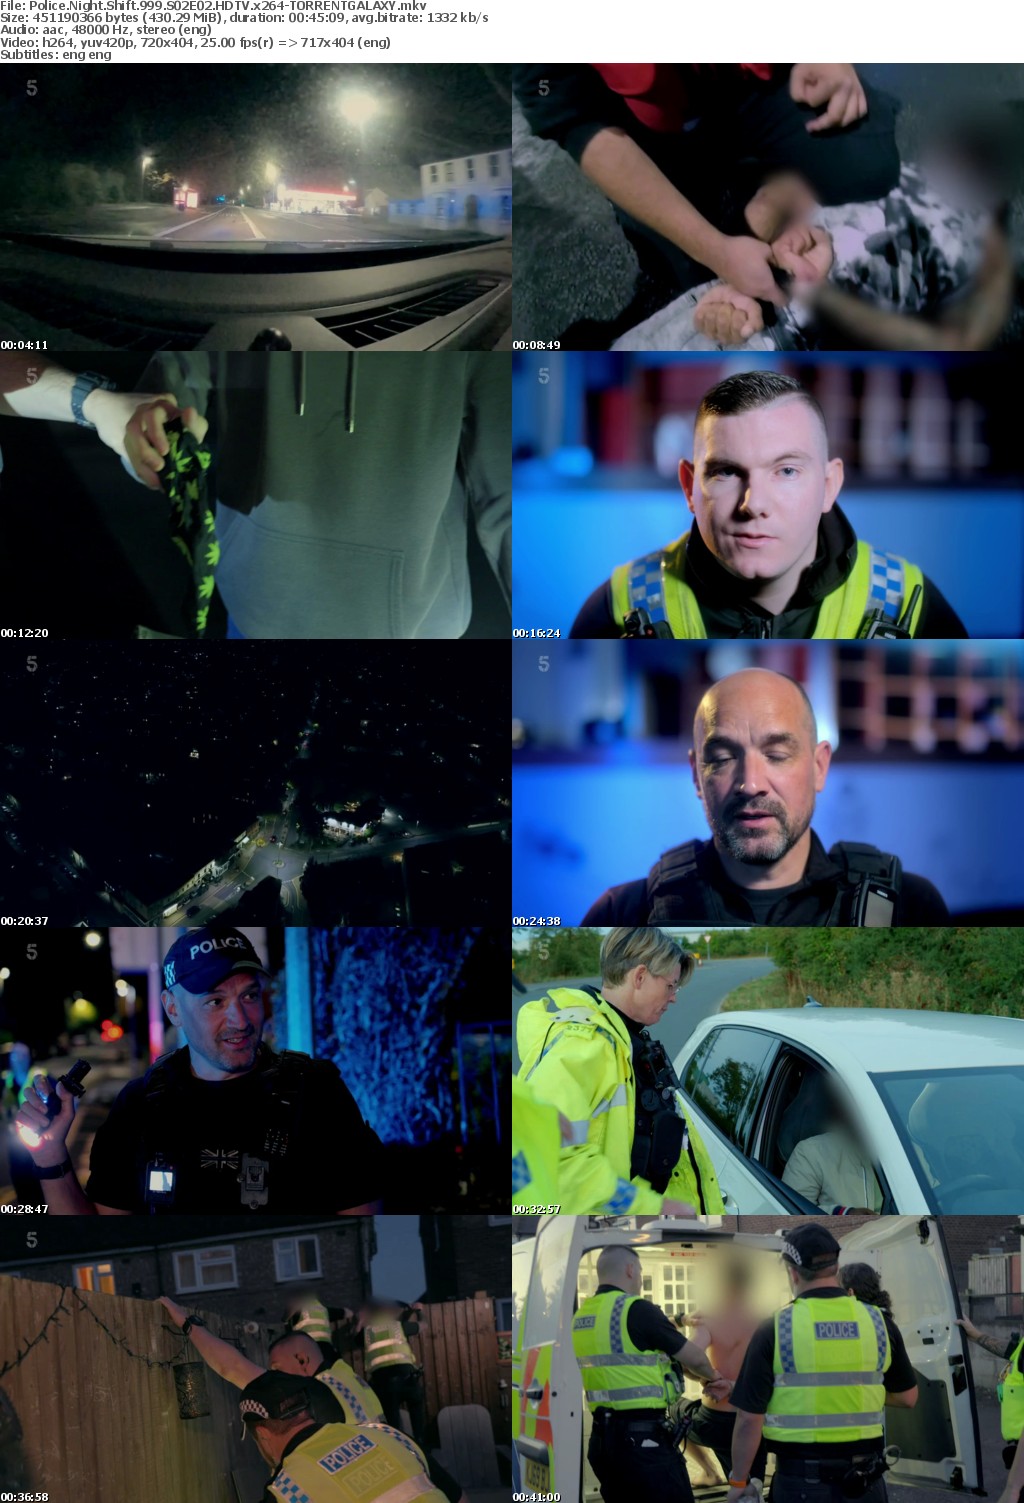 Police Night Shift 999 S02E02 HDTV x264-GALAXY